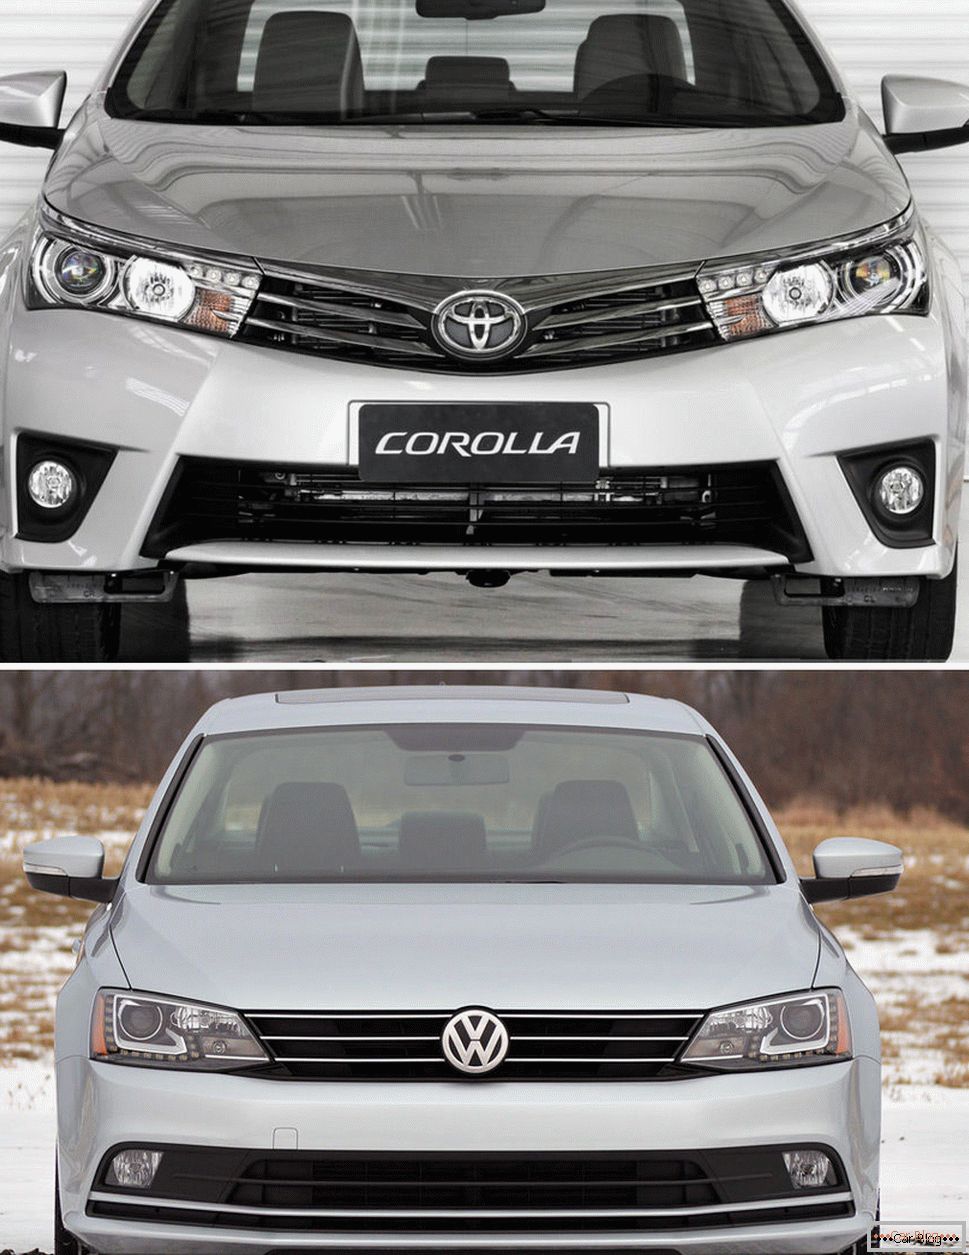 Toyota corolla vs. volkswagen jetta